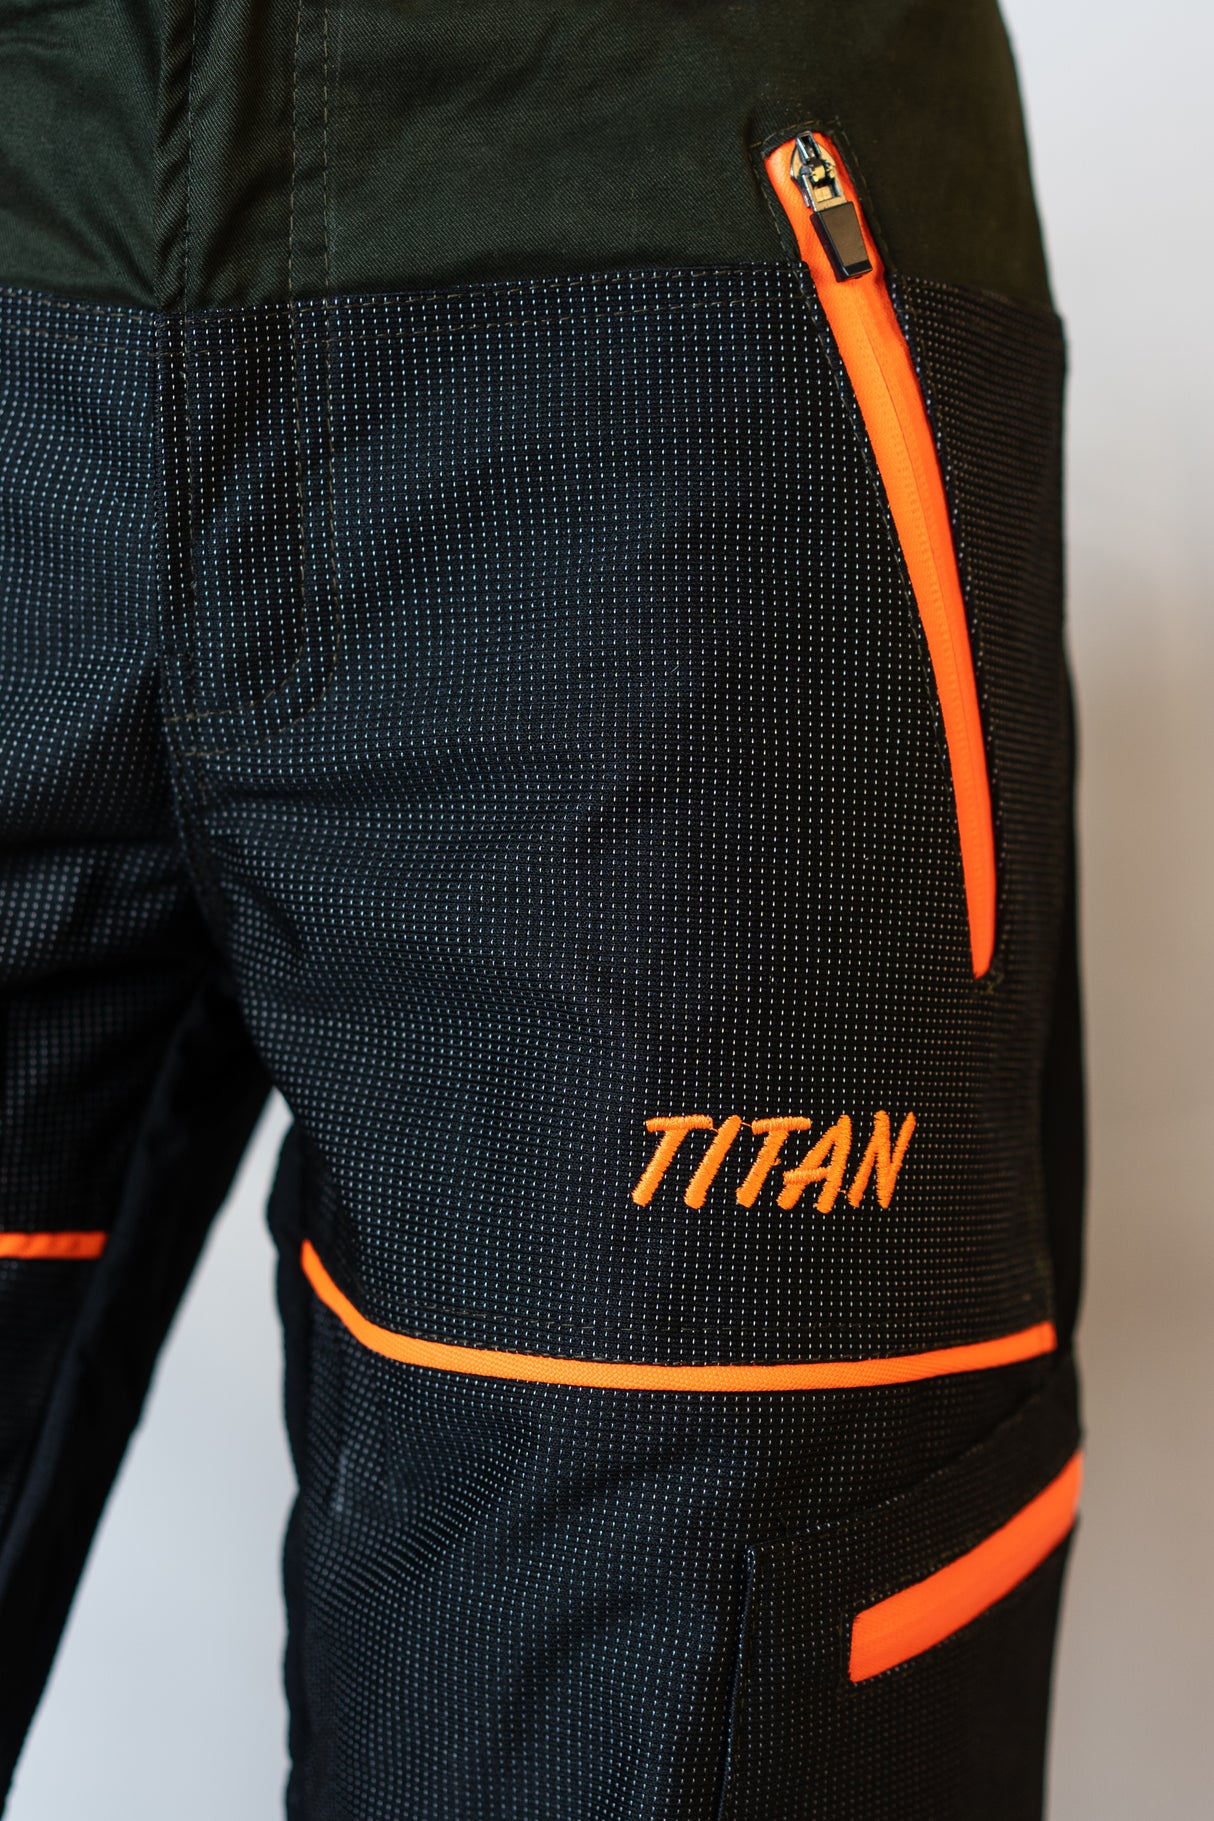 Pantalone hunting life titan orange, yellow, neutro